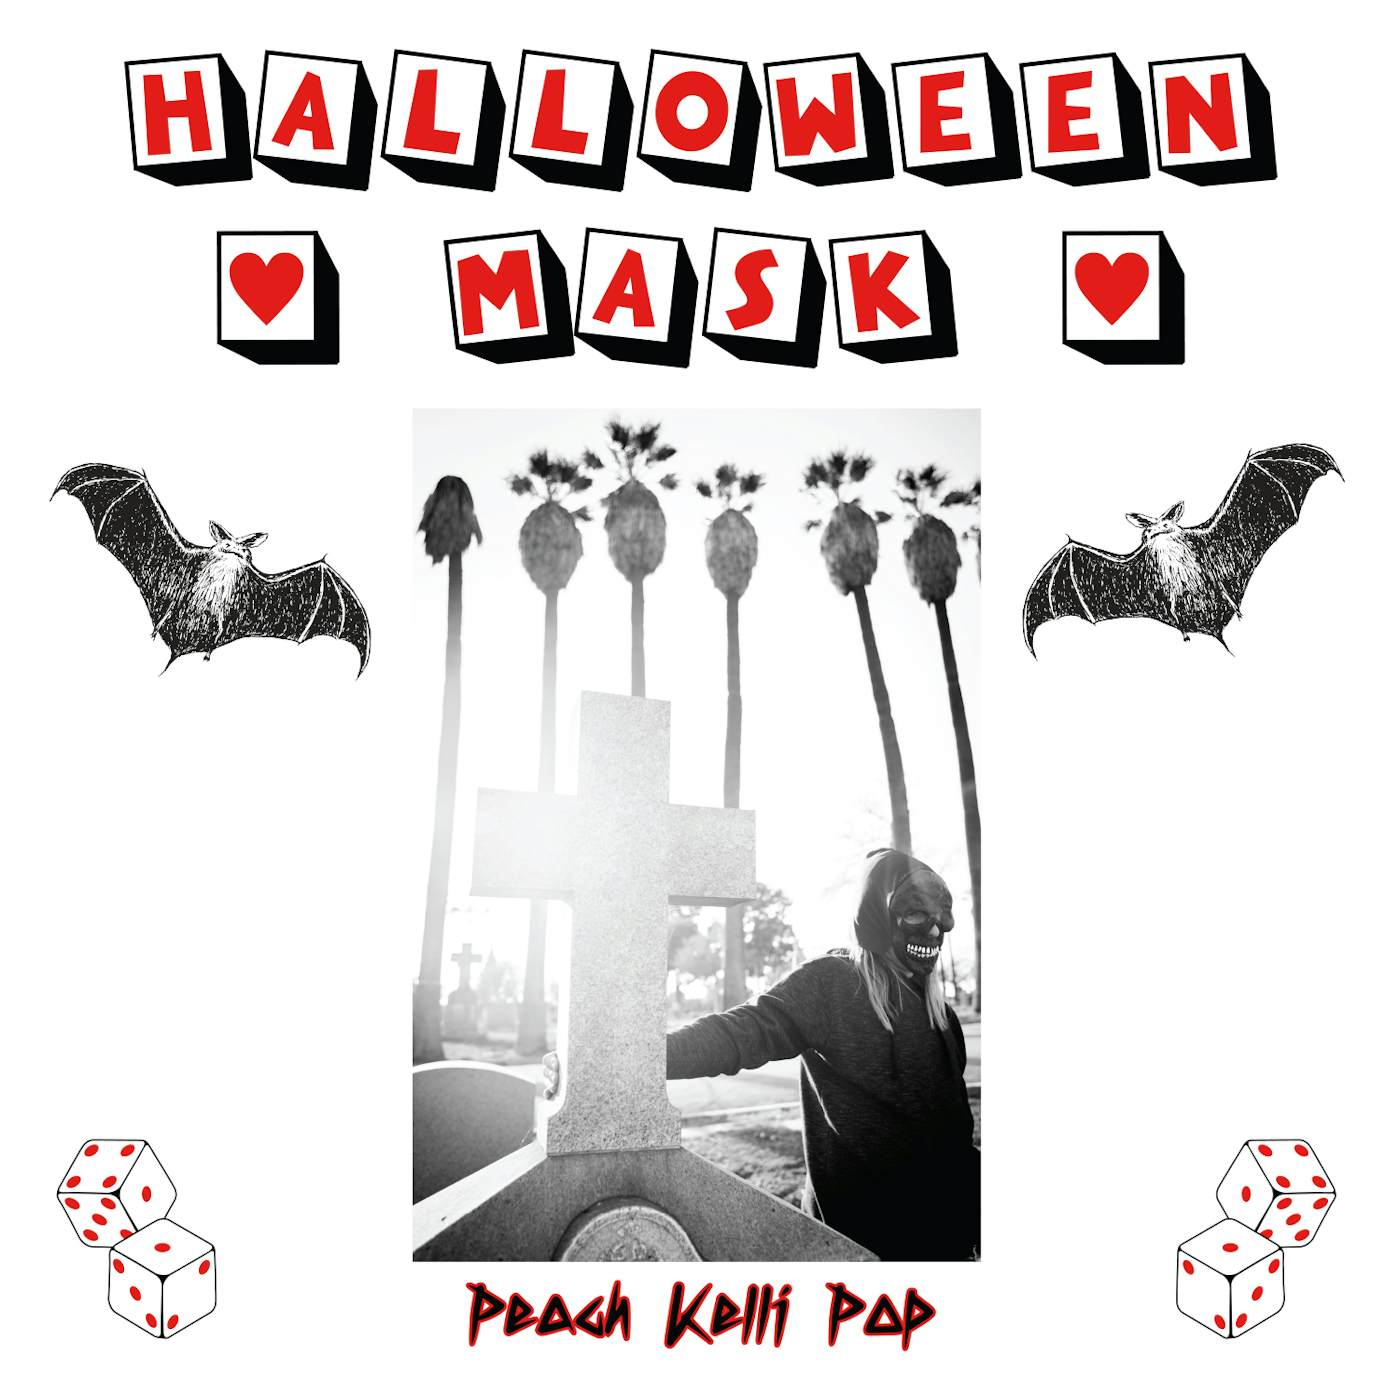 Peach Kelli Pop Halloween Mask Vinyl Record